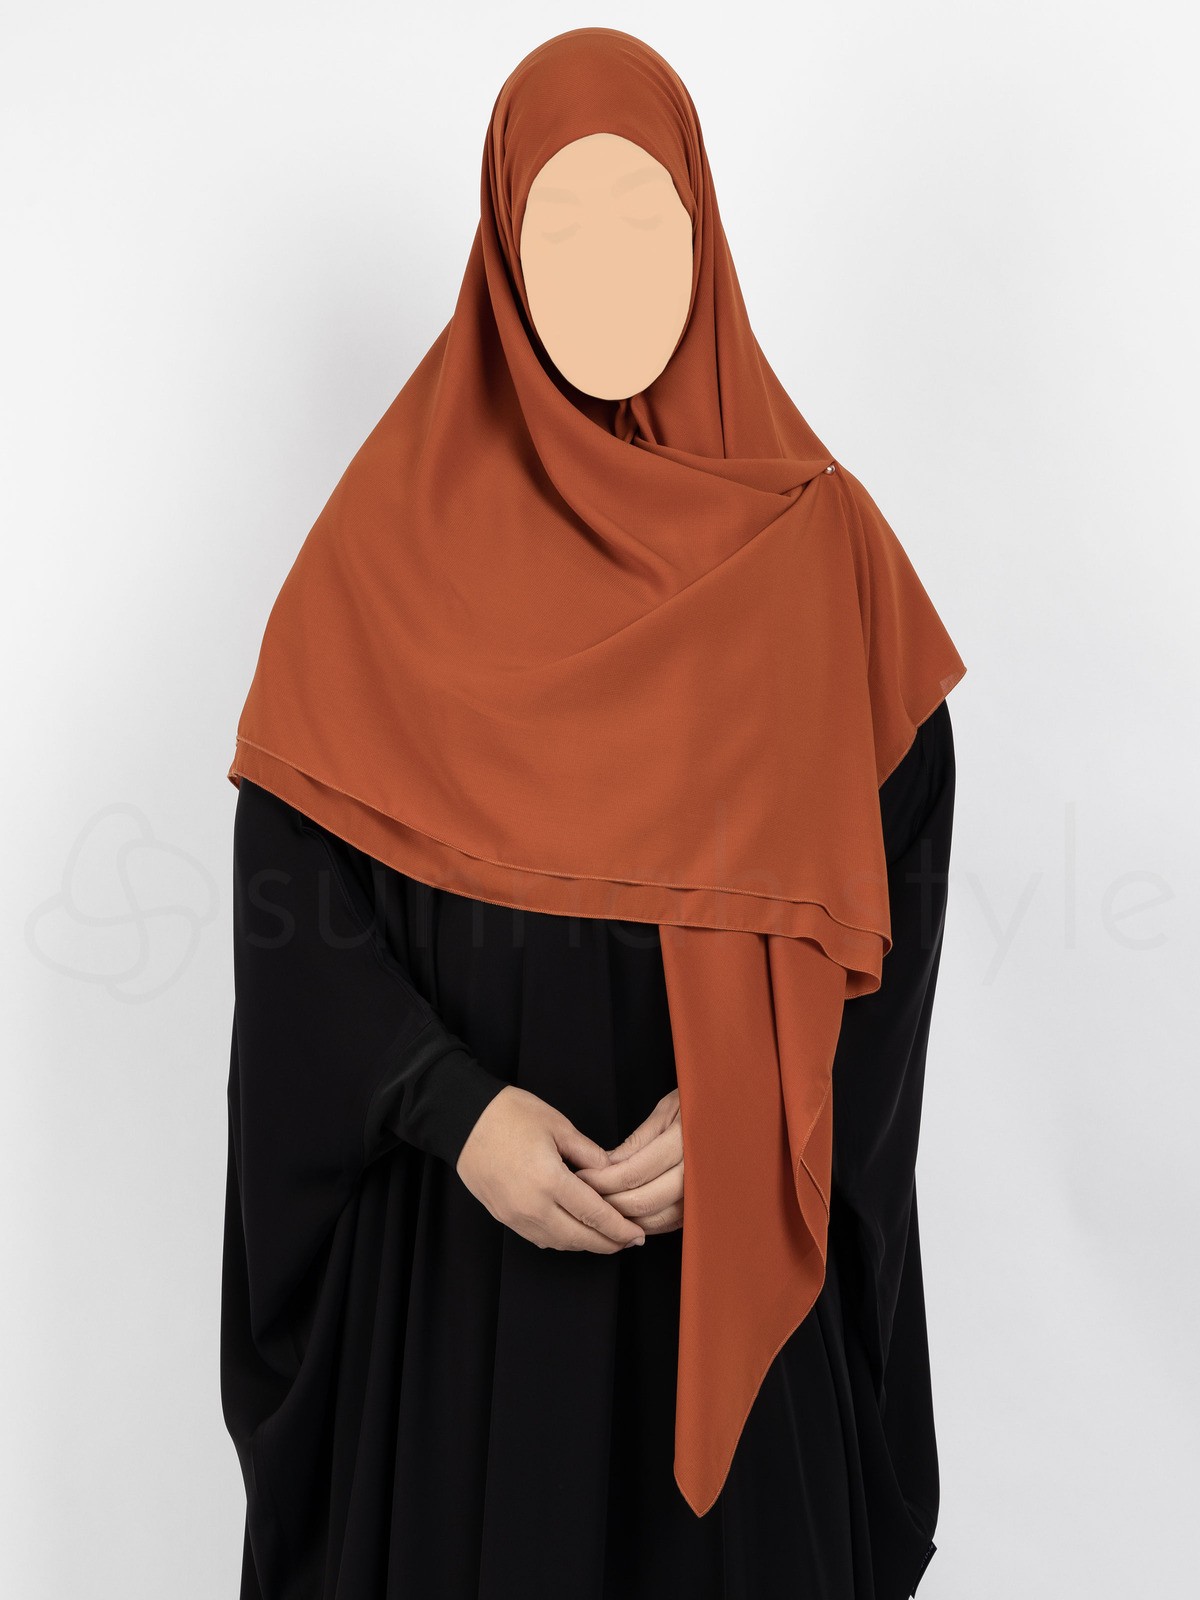 Sunnah Style Essentials Square Hijab - Large (Autumn)